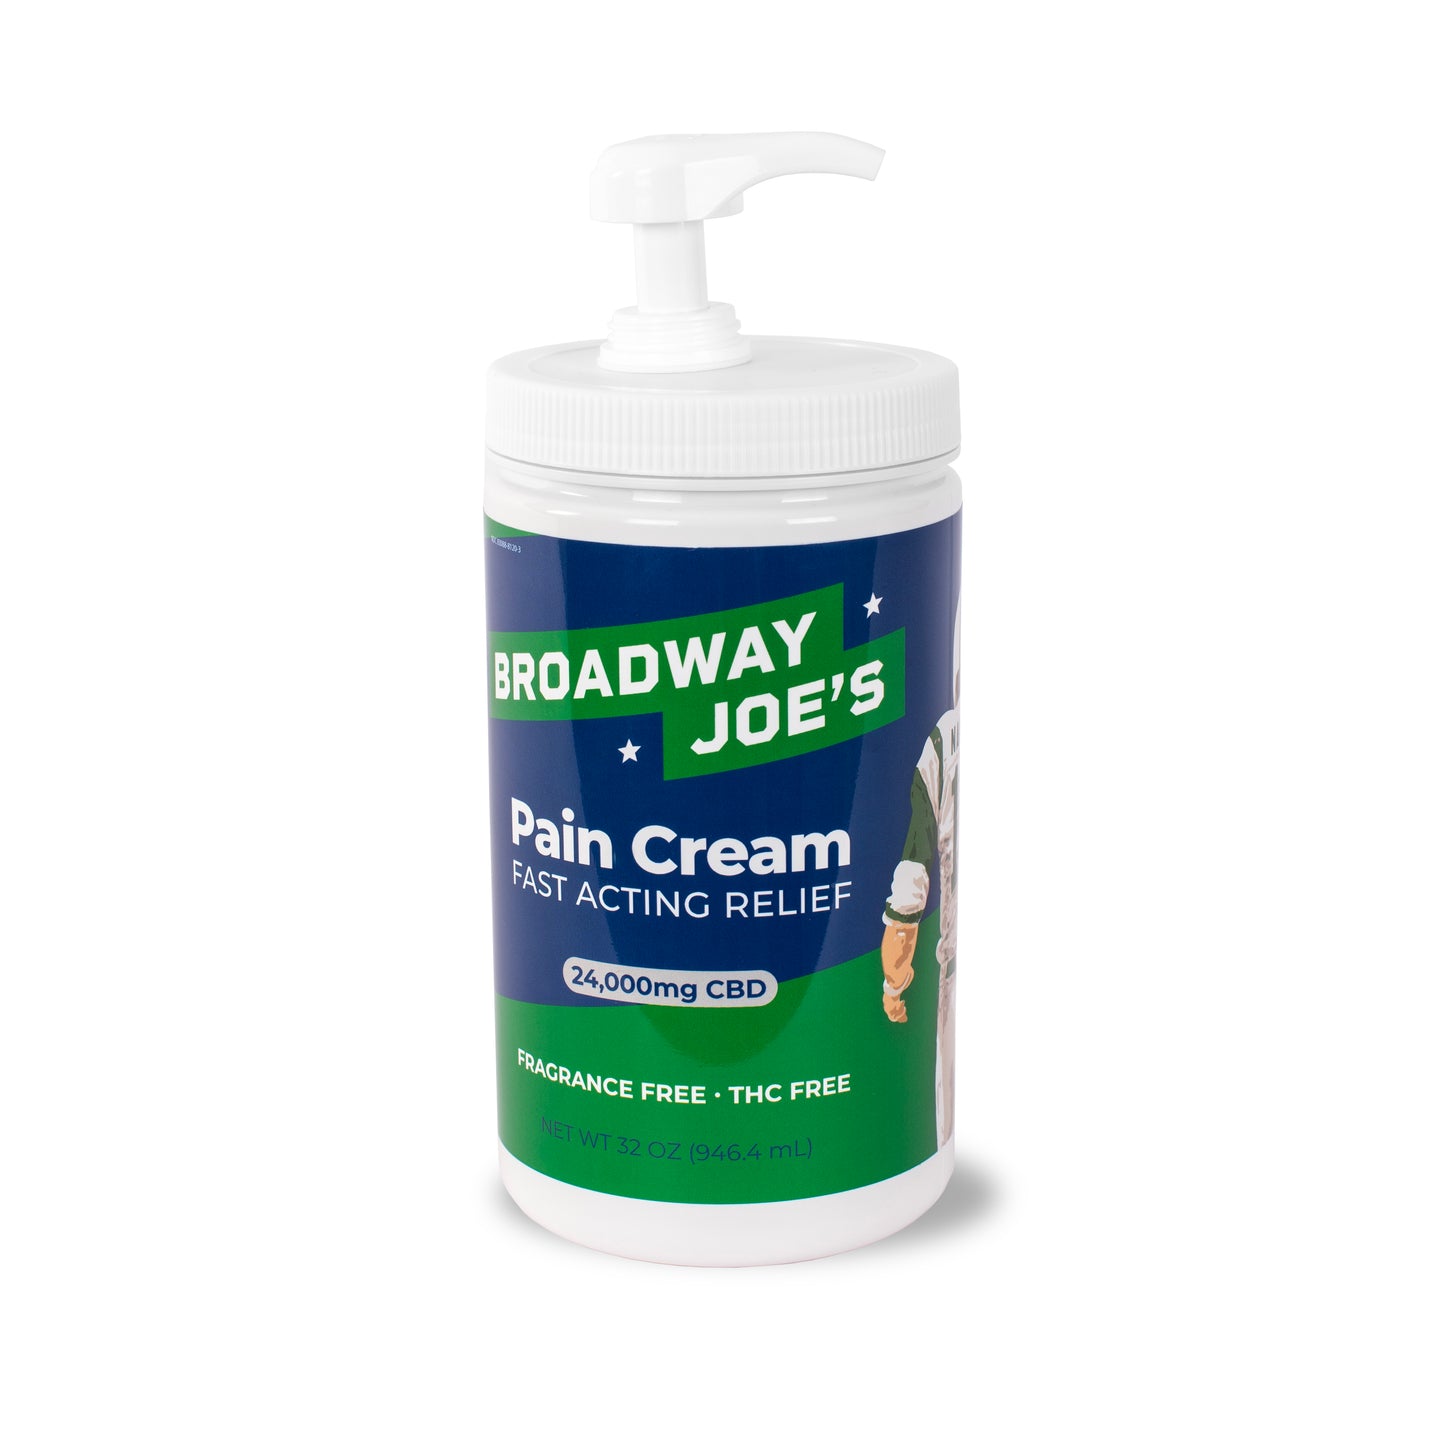 Broadway Joe's Pain Cream (32 oz)